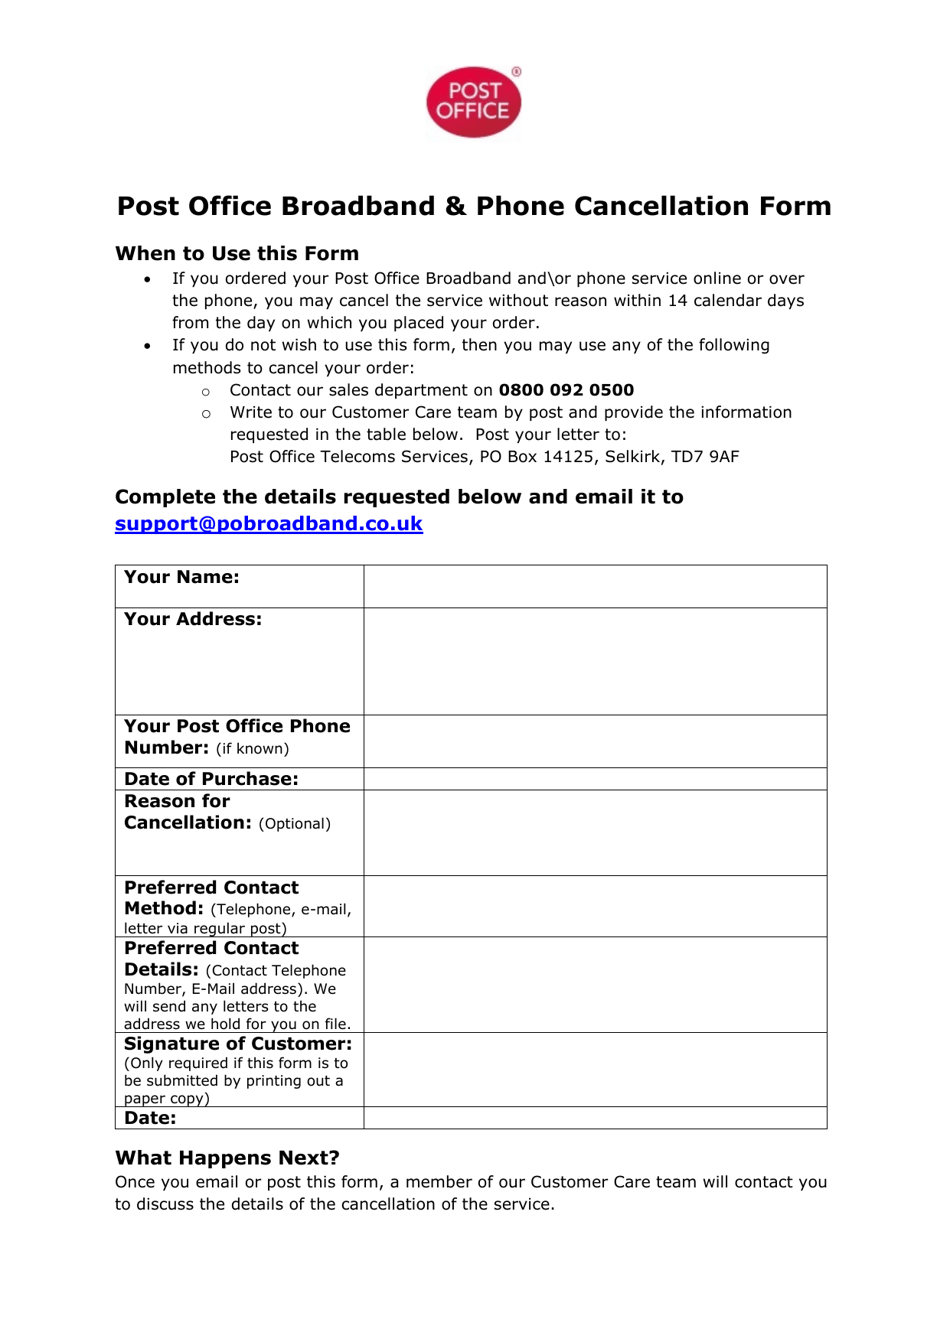 Post Office Broadband  Phone Cancellation Form - United Kingdom, Page 1